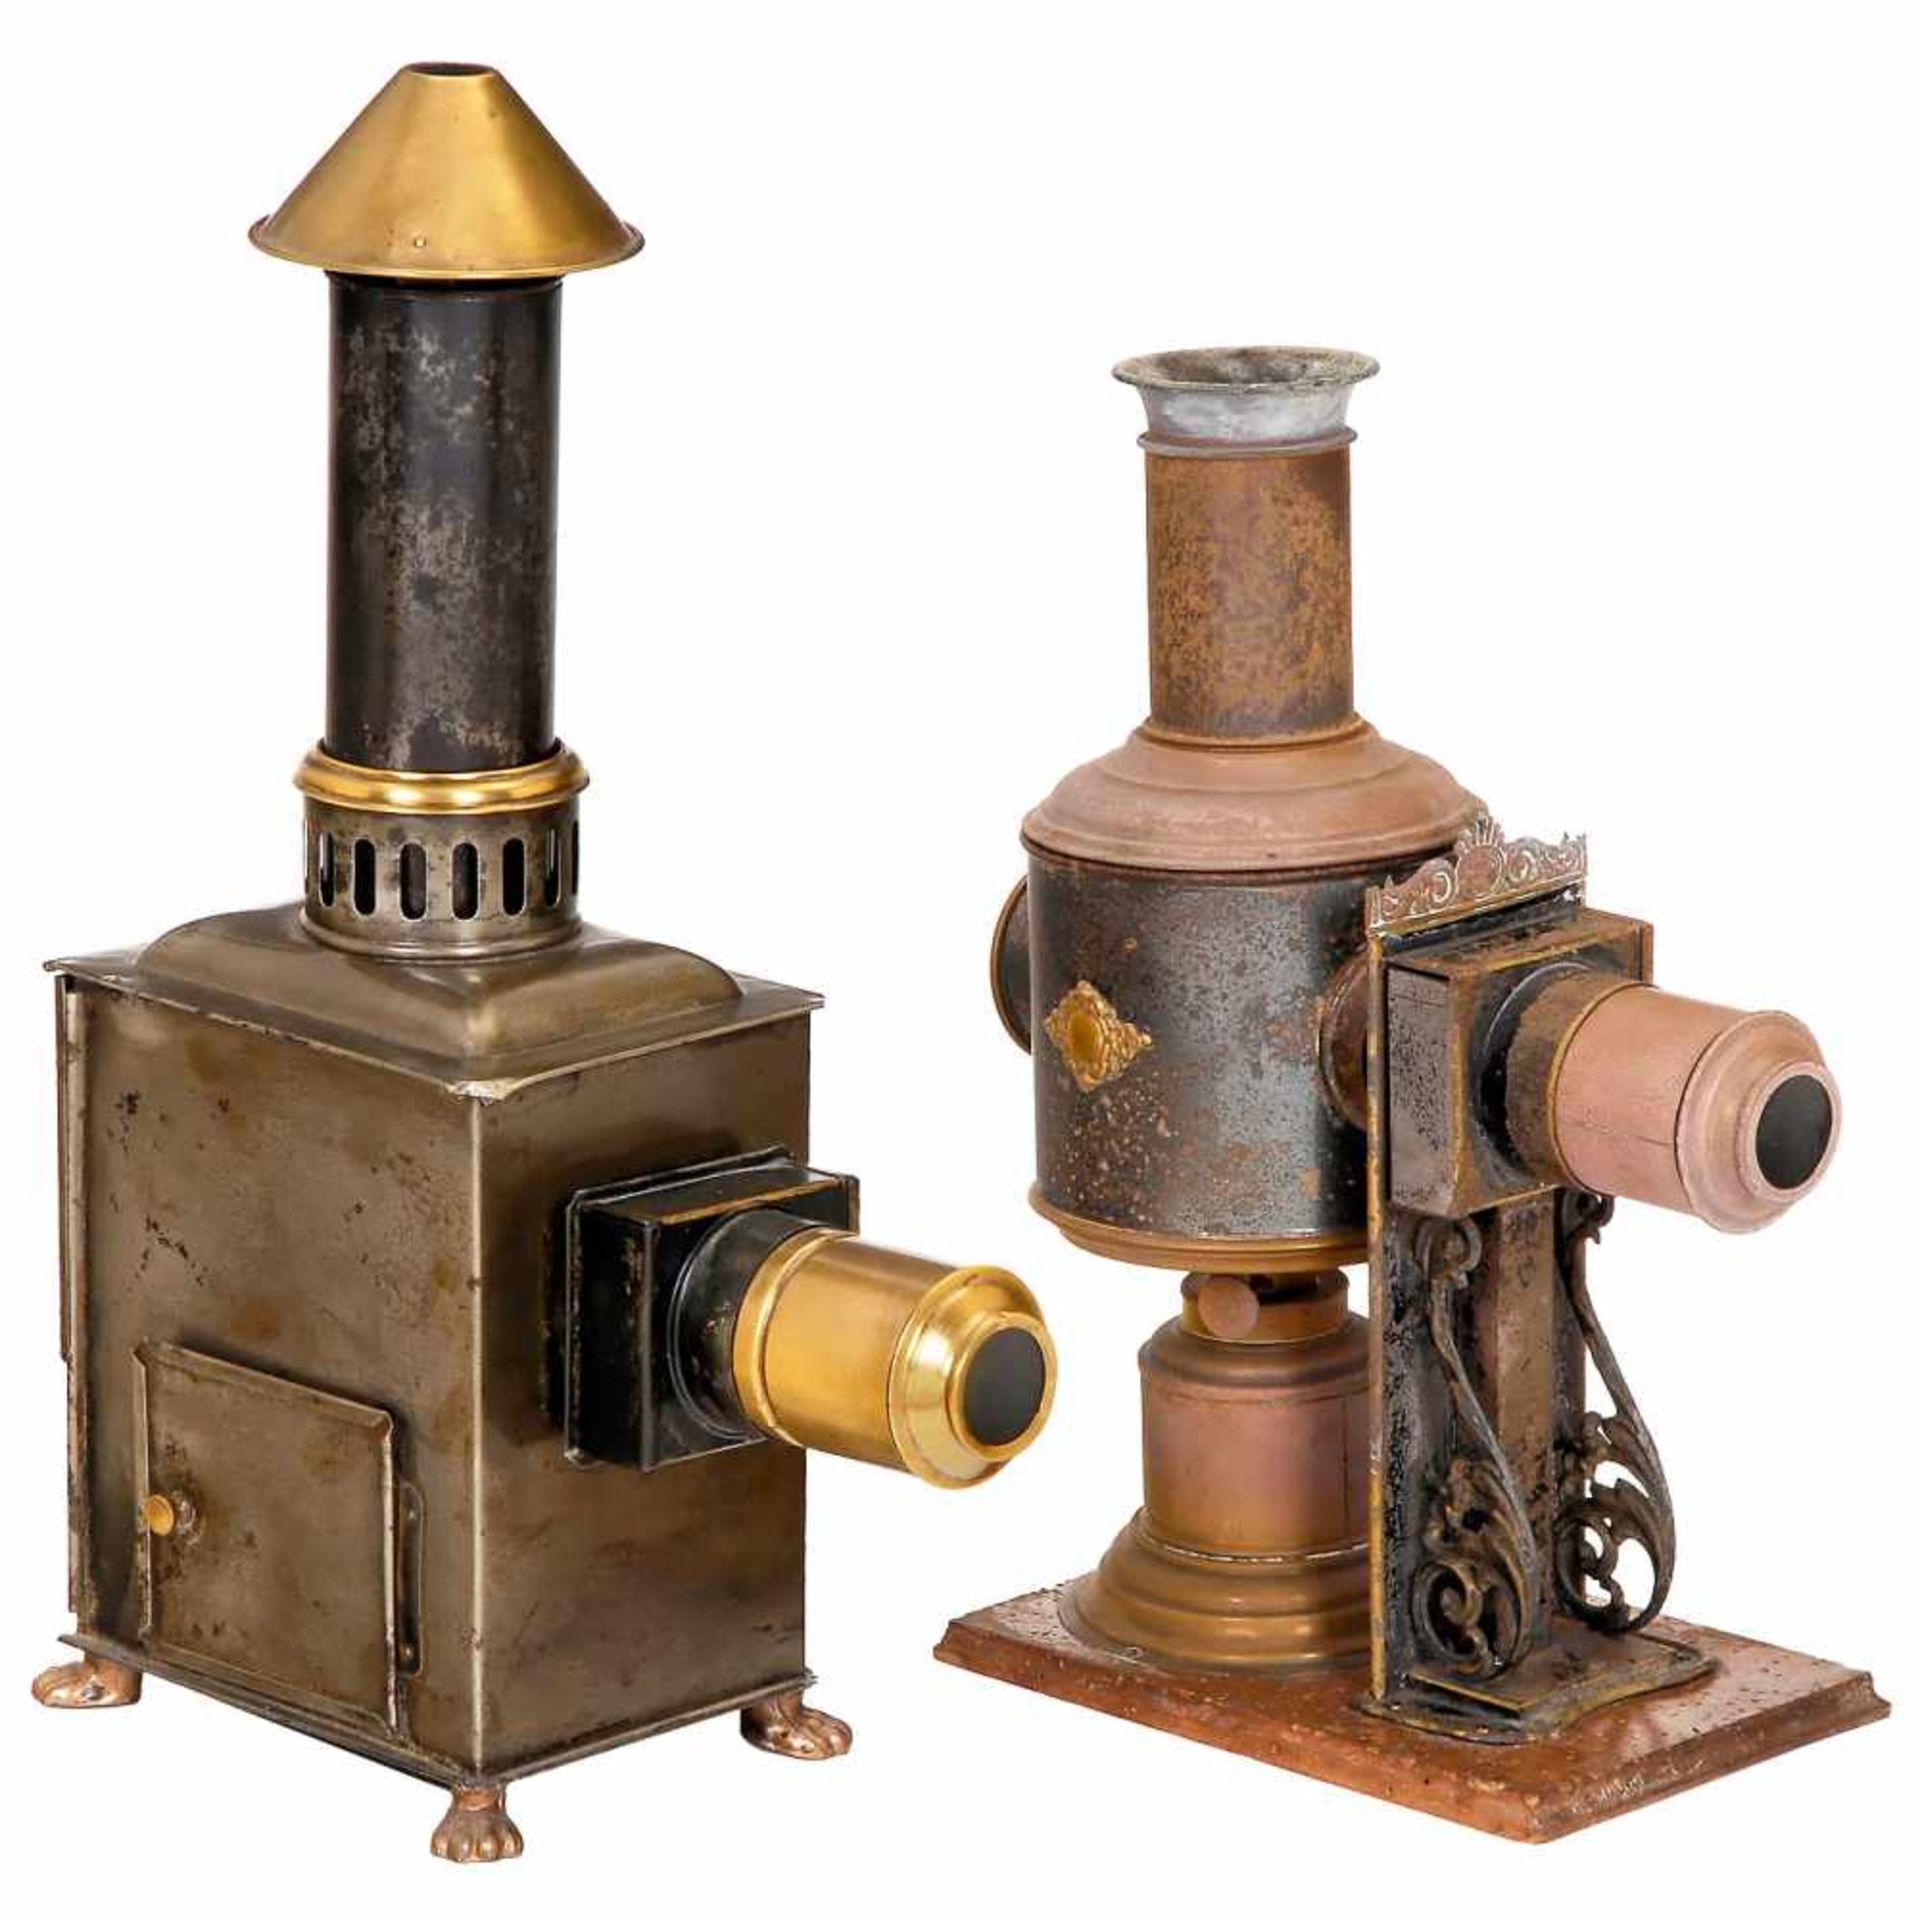 2 Magic Lanterns by PlankErnst Plank, Nuremberg. 1) "Gloria", c. 1900, with burner/chimney unit,